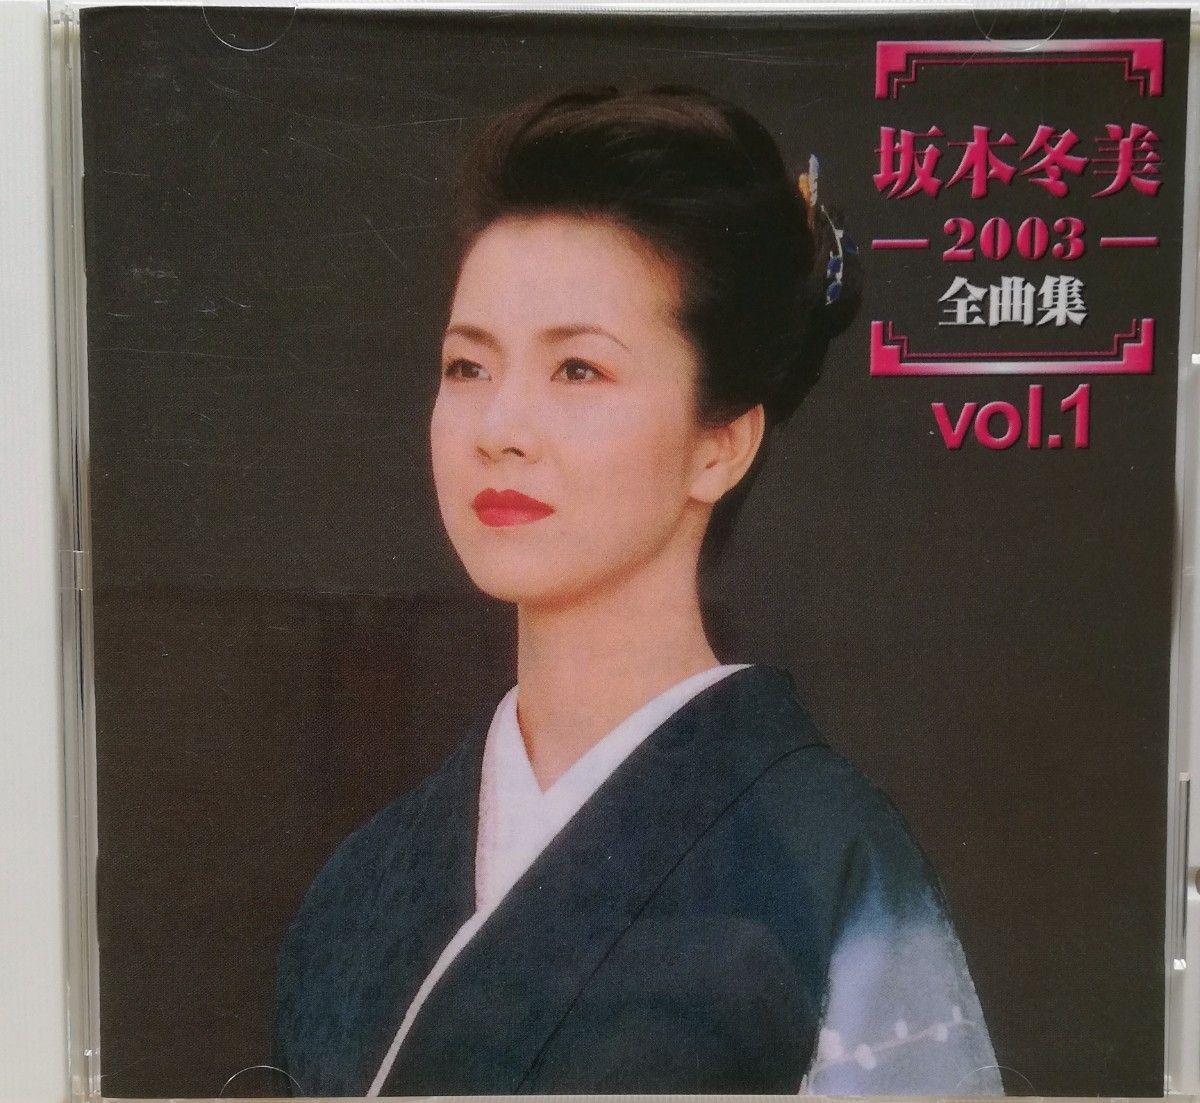  03. (CD) 坂本冬美 - 2003 全曲集 VOL.1 の画像1